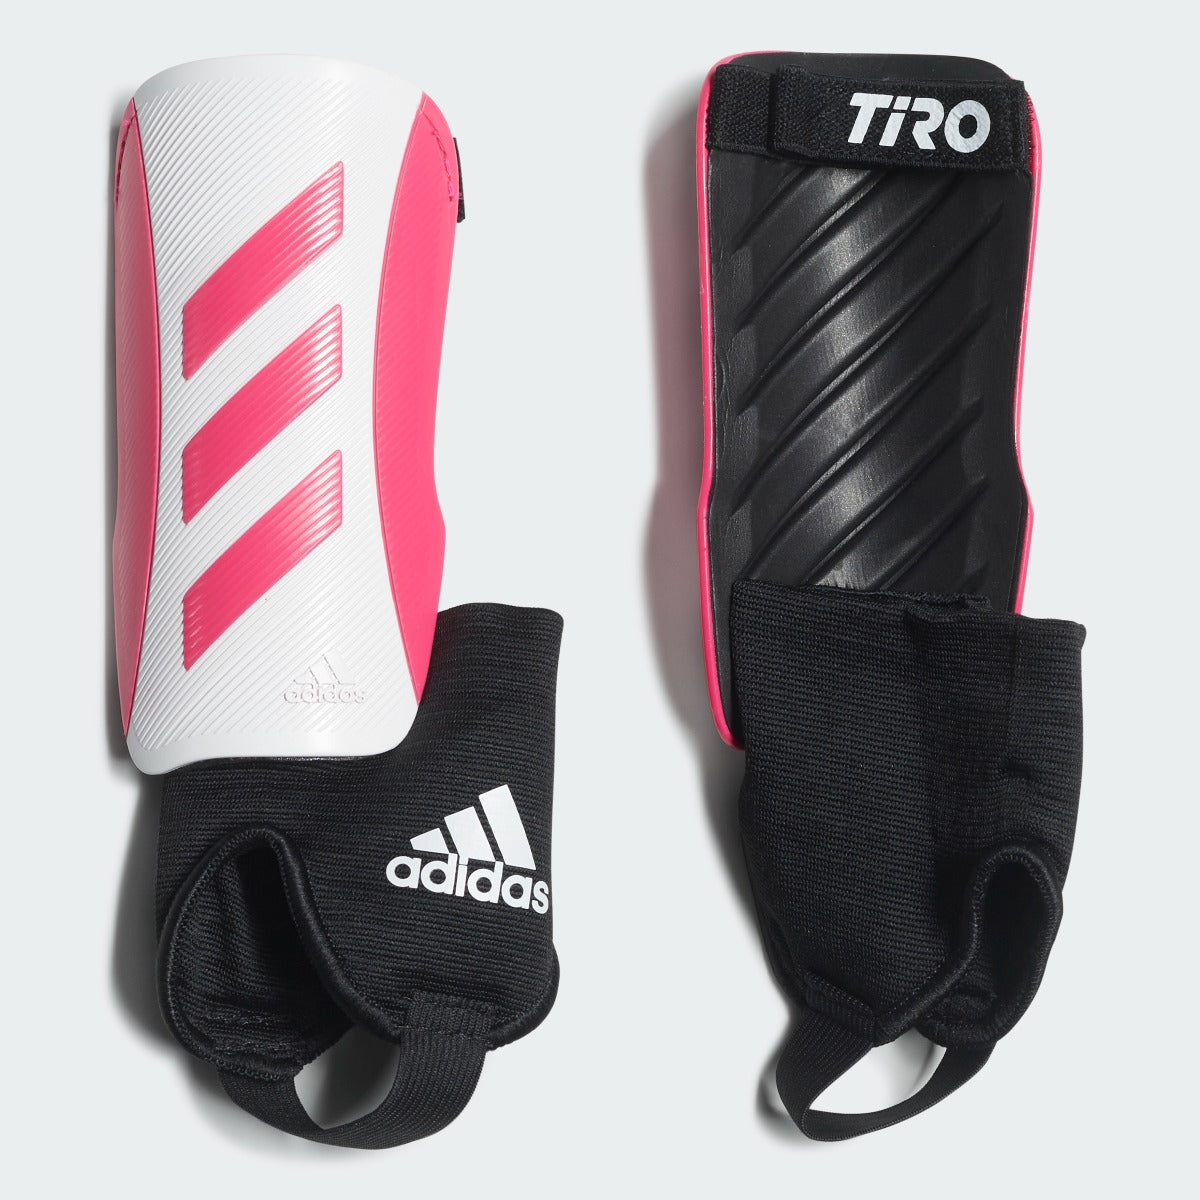 adidas Youth Tiro Match Shin Guards - Shock Pink-White (Set)